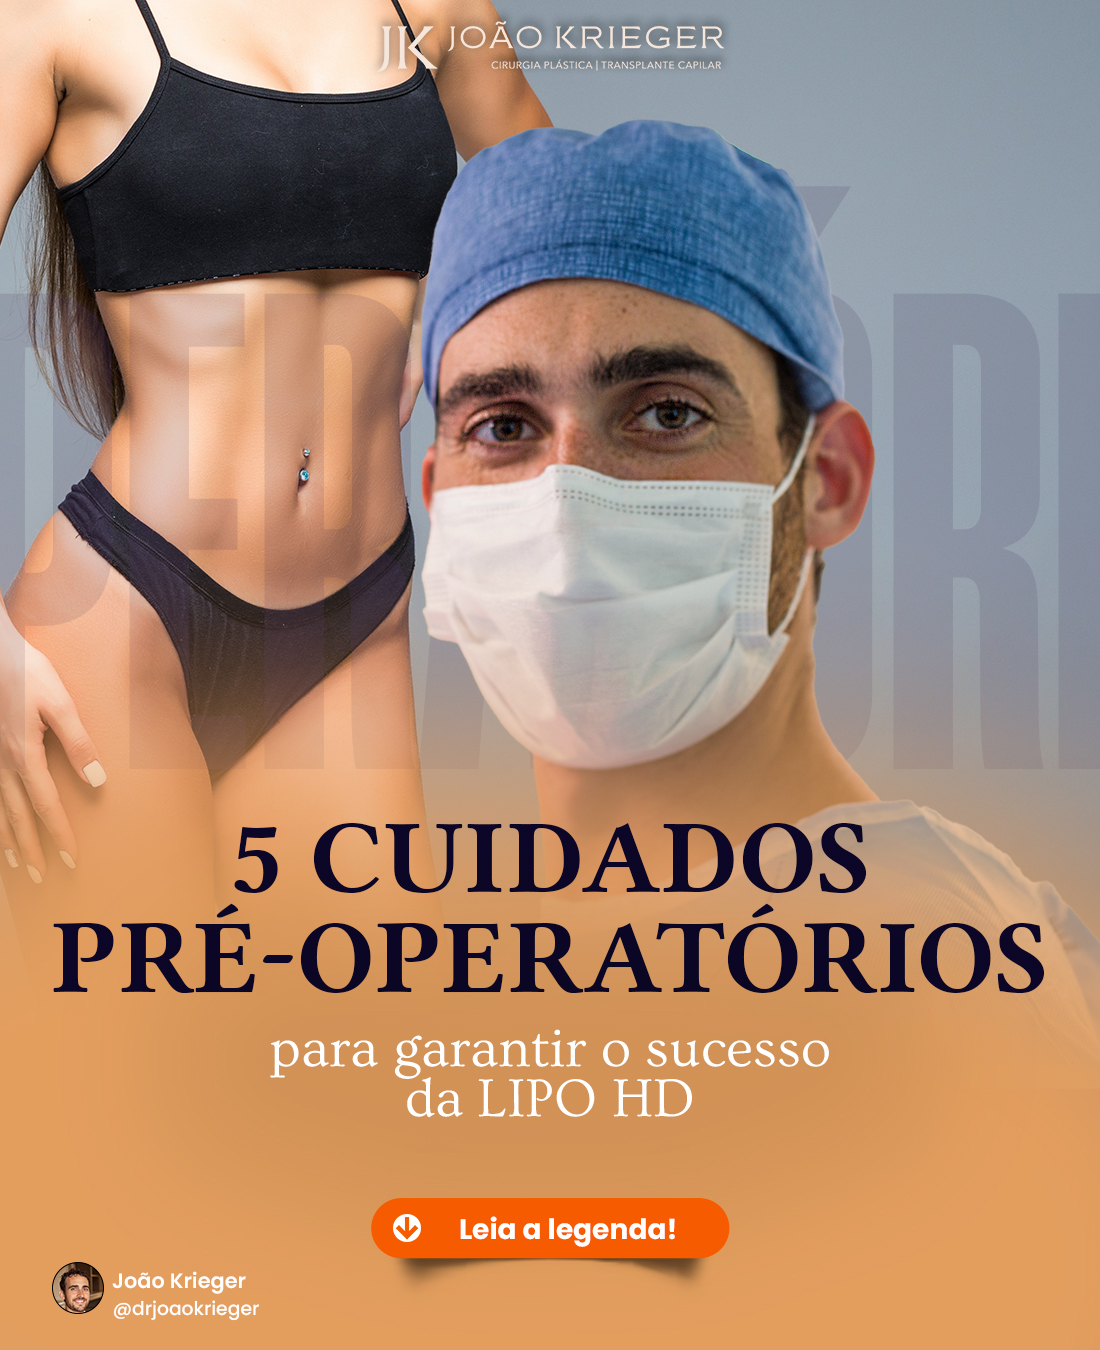 LIPO HD - Cirurgia Plástica